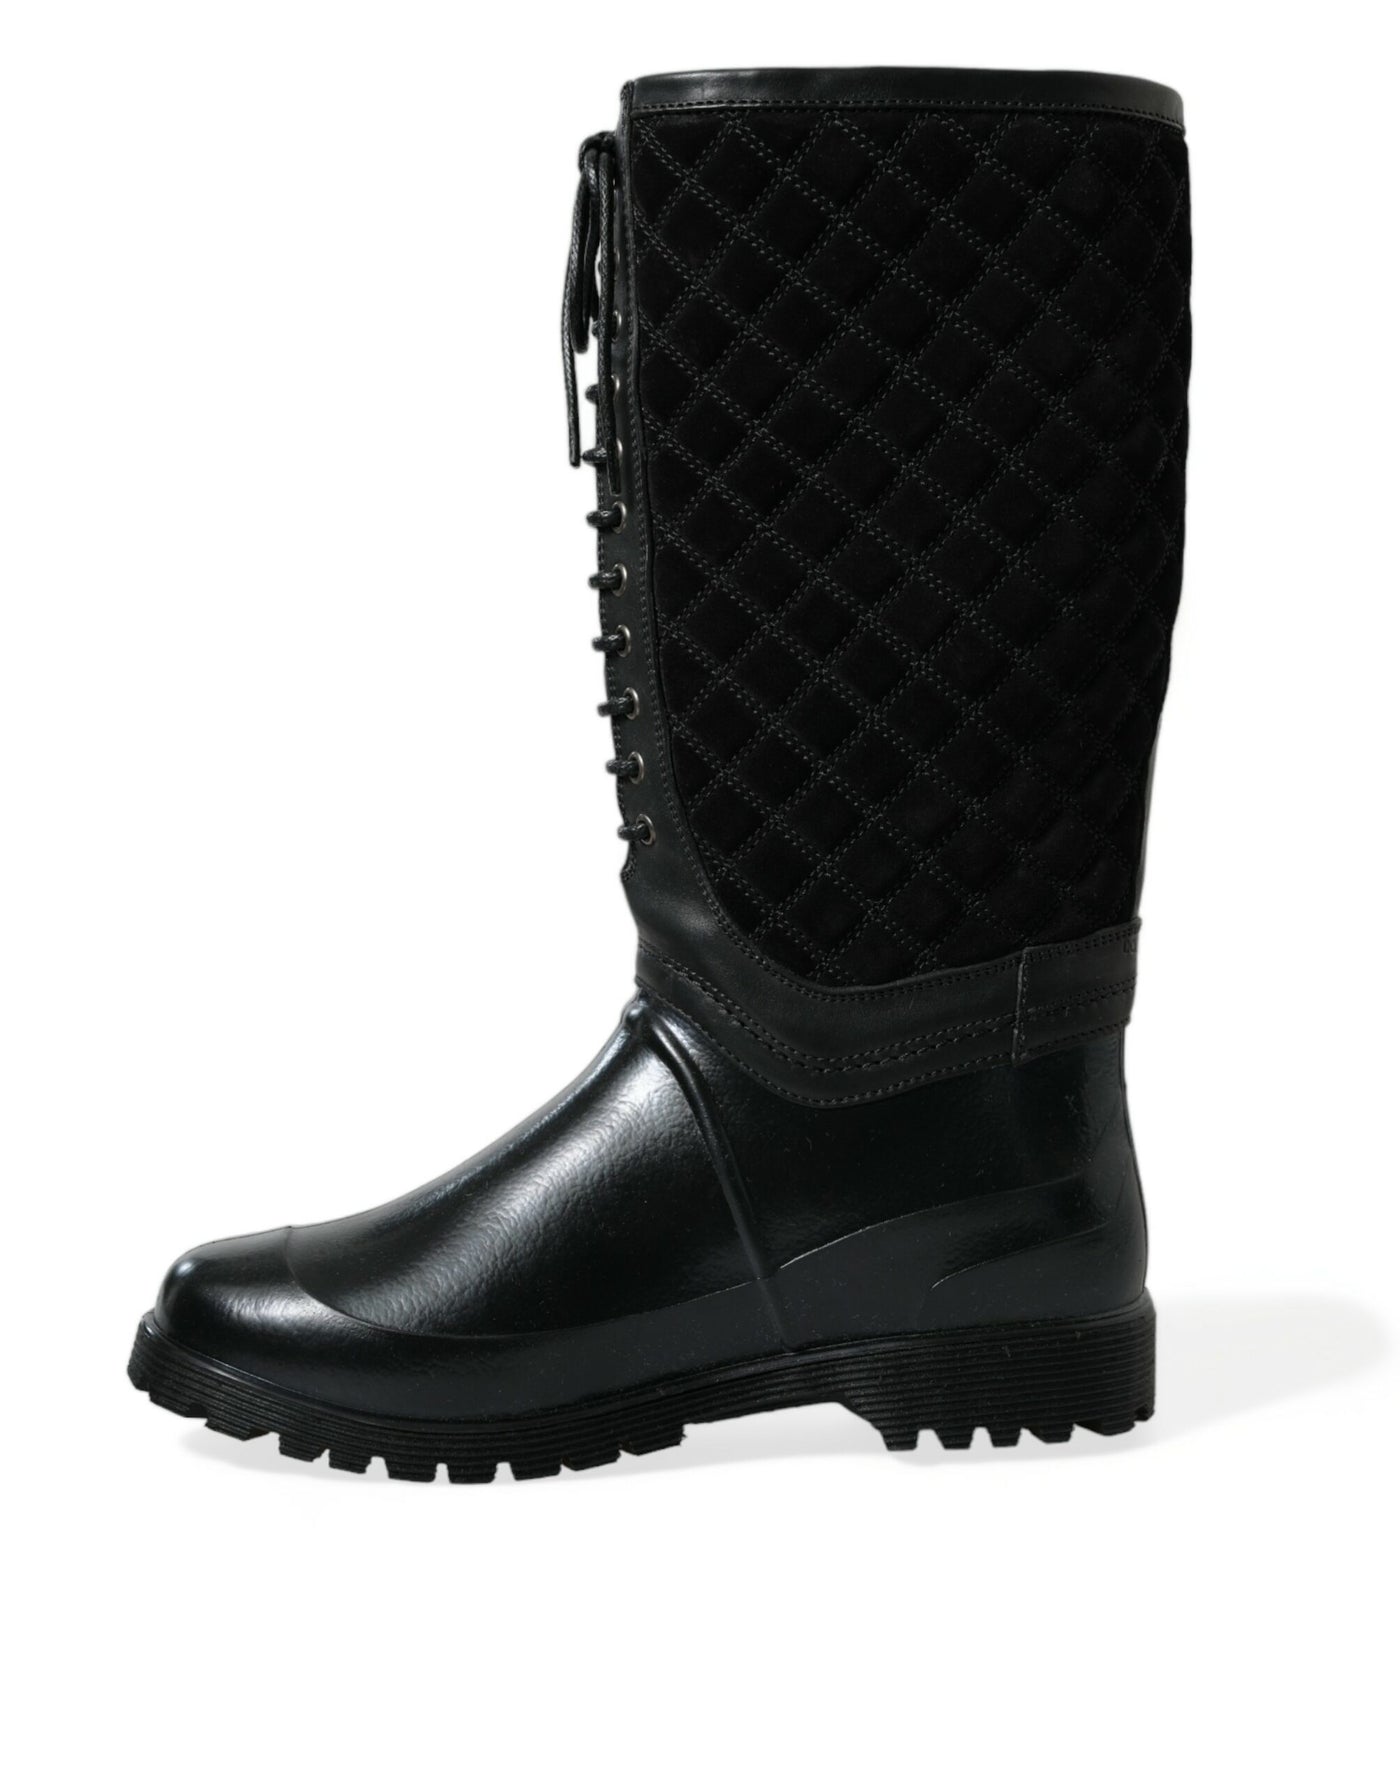 Dolce & Gabbana Black Chioggia Rubber Suede Rain Boots Shoes